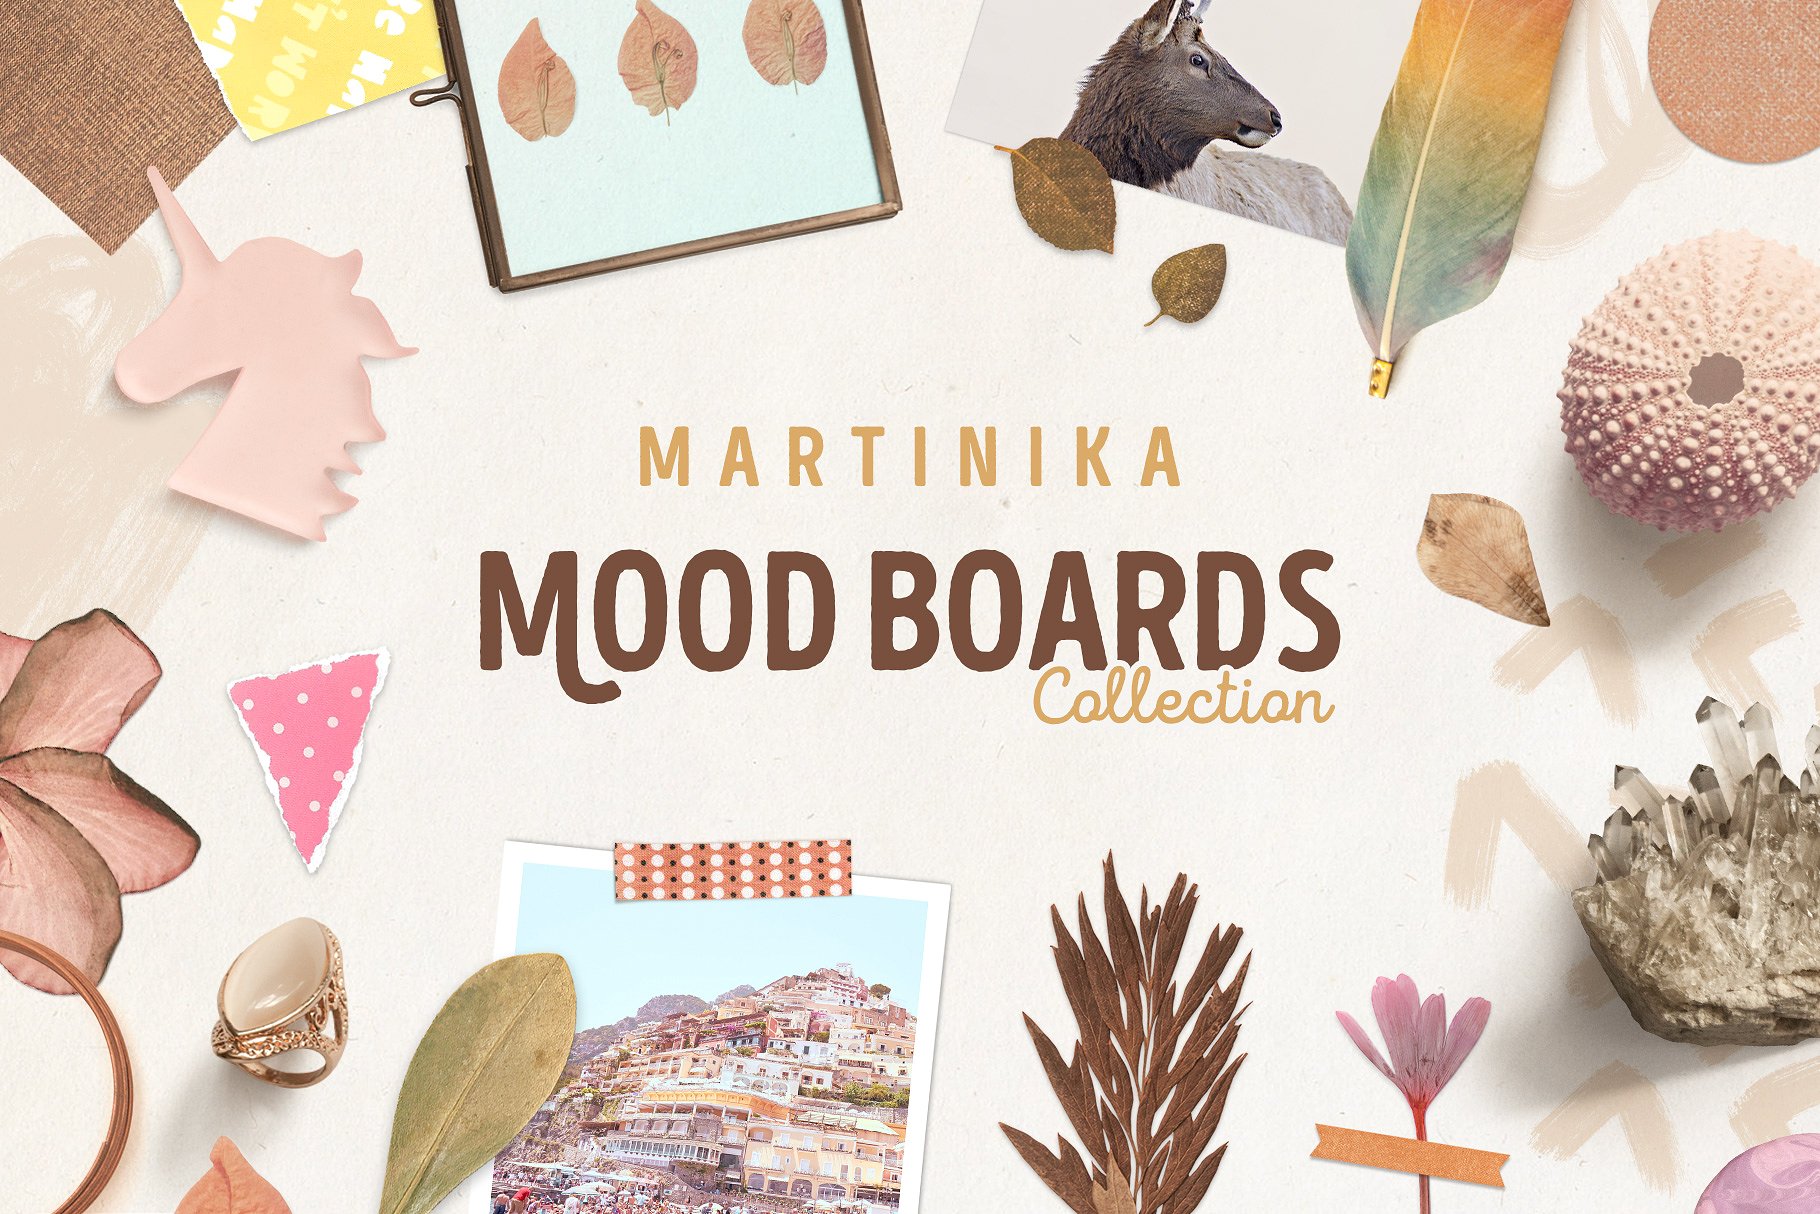 夏日狂欢魅力场景设计工具包 Martinika Mood Boards Collection插图